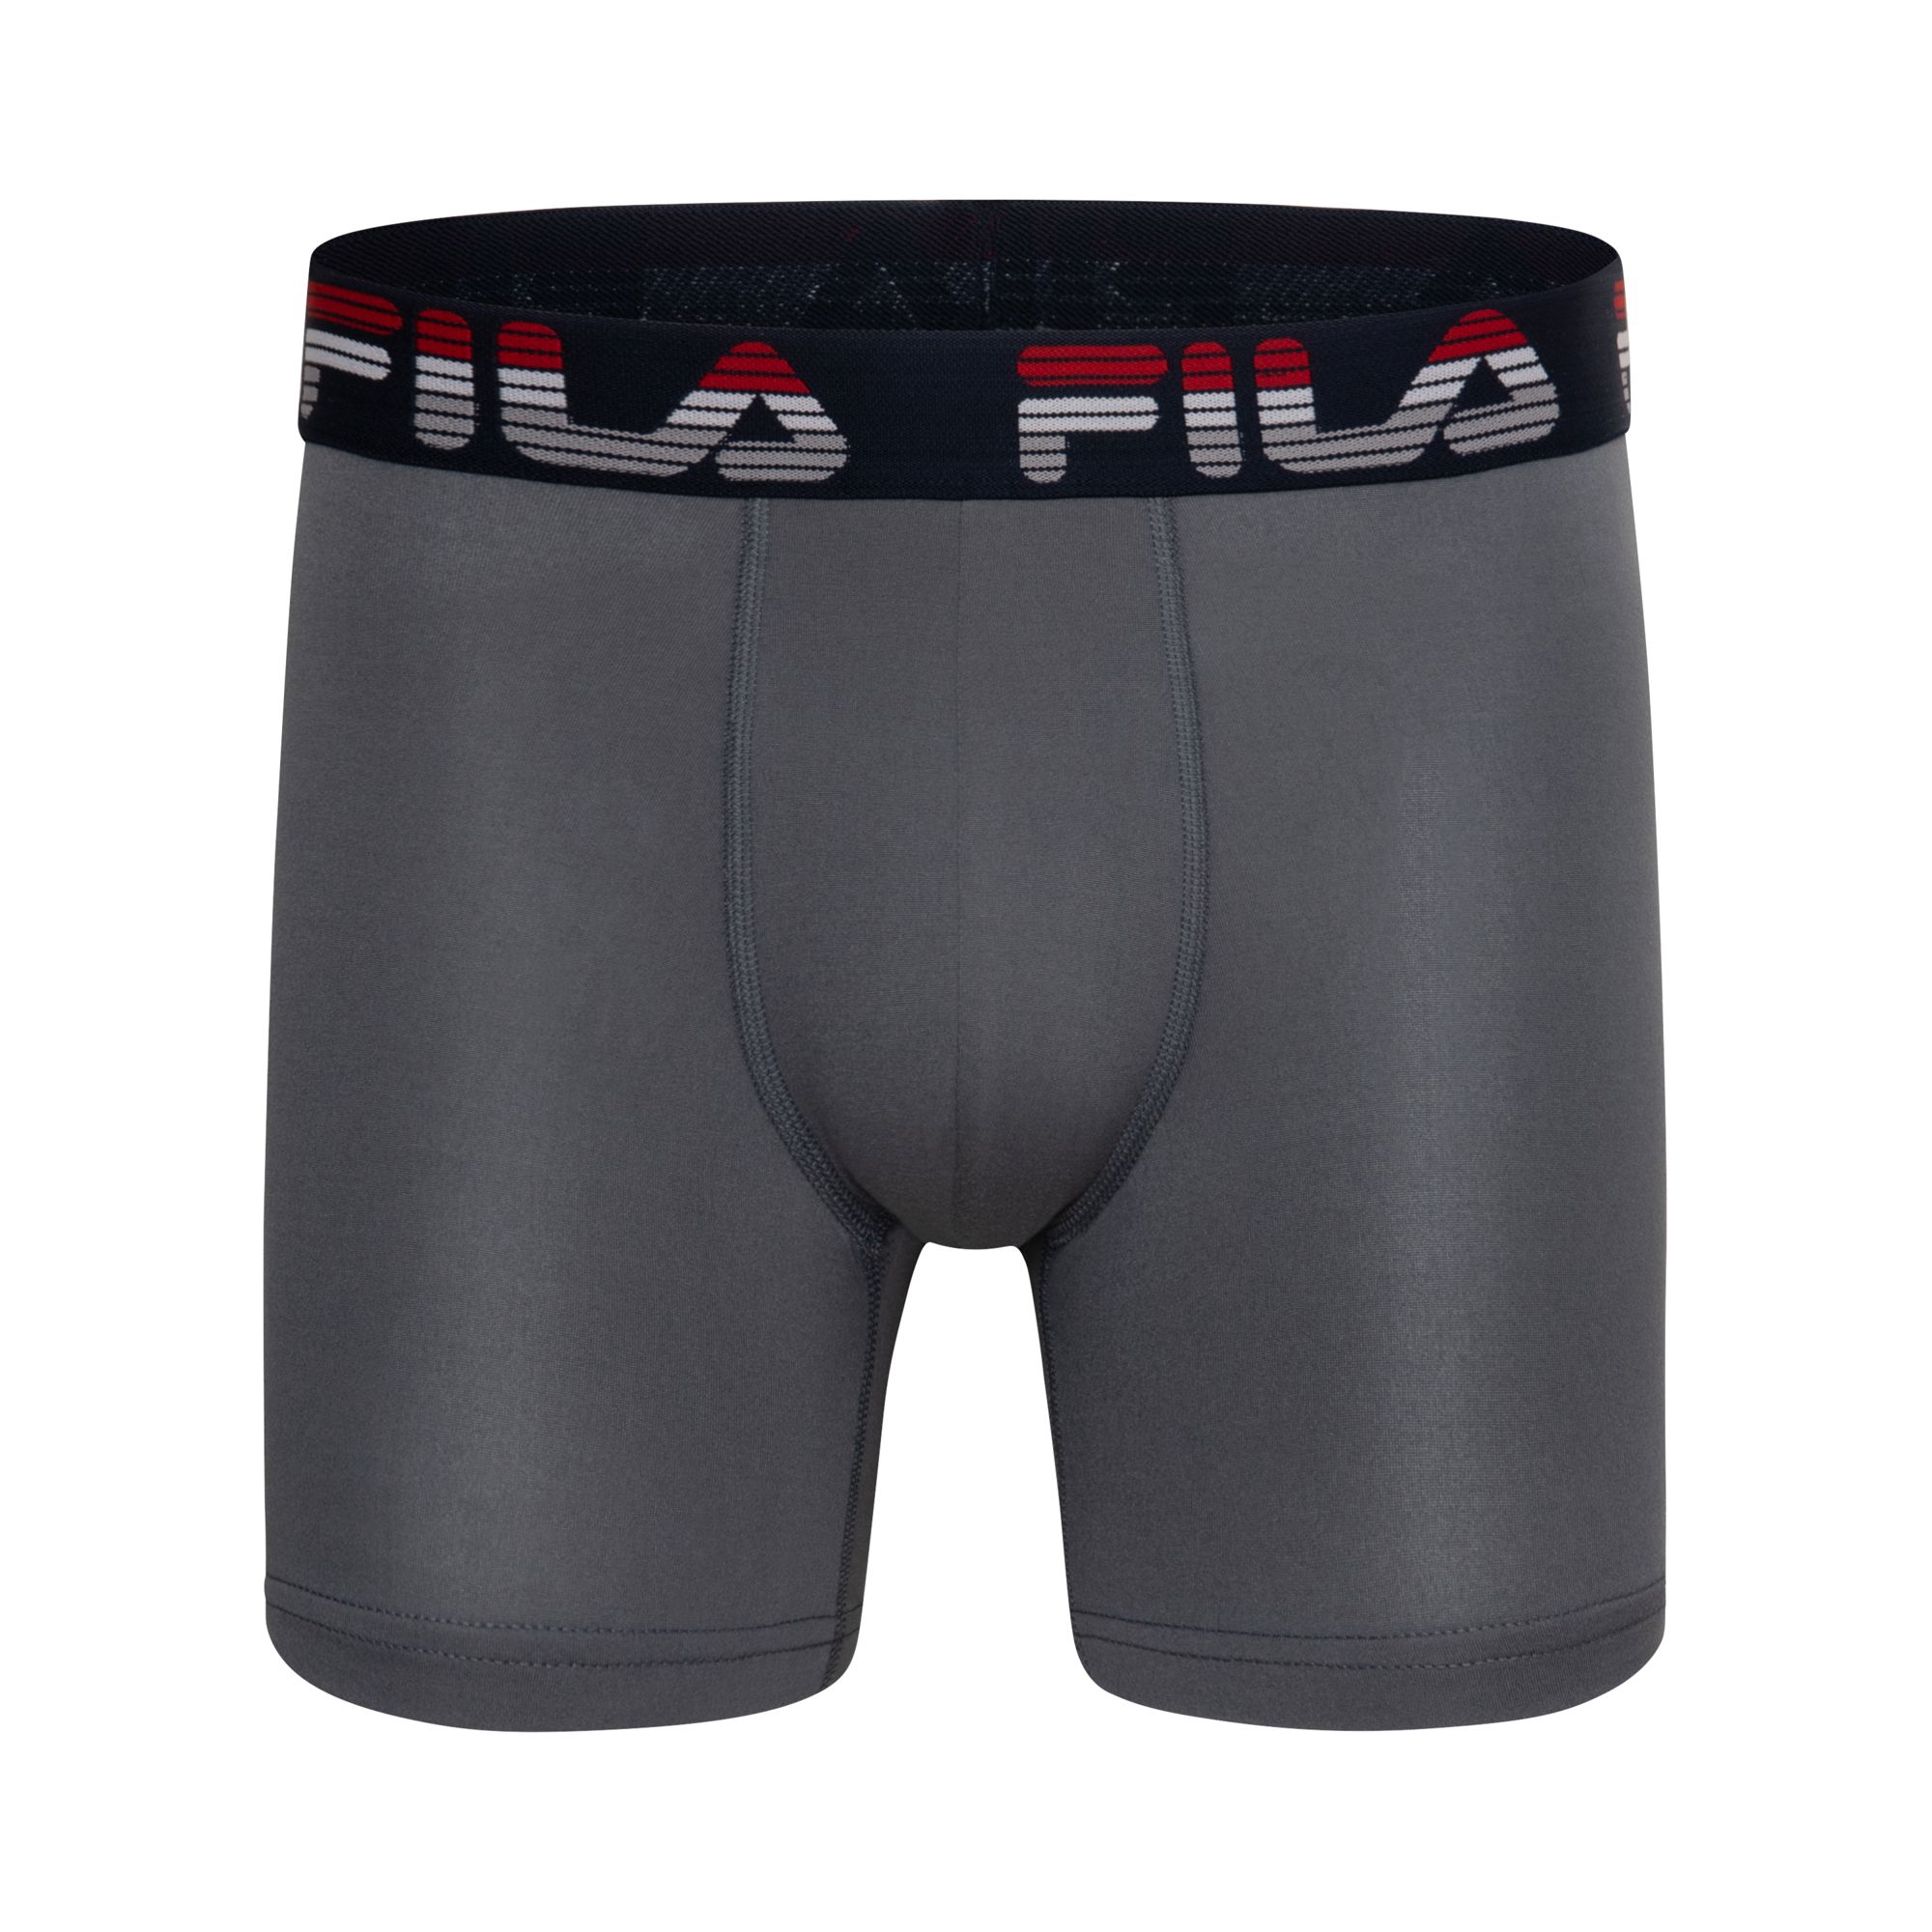 Boxer shorts Fila Boxers 1-Pack Navy